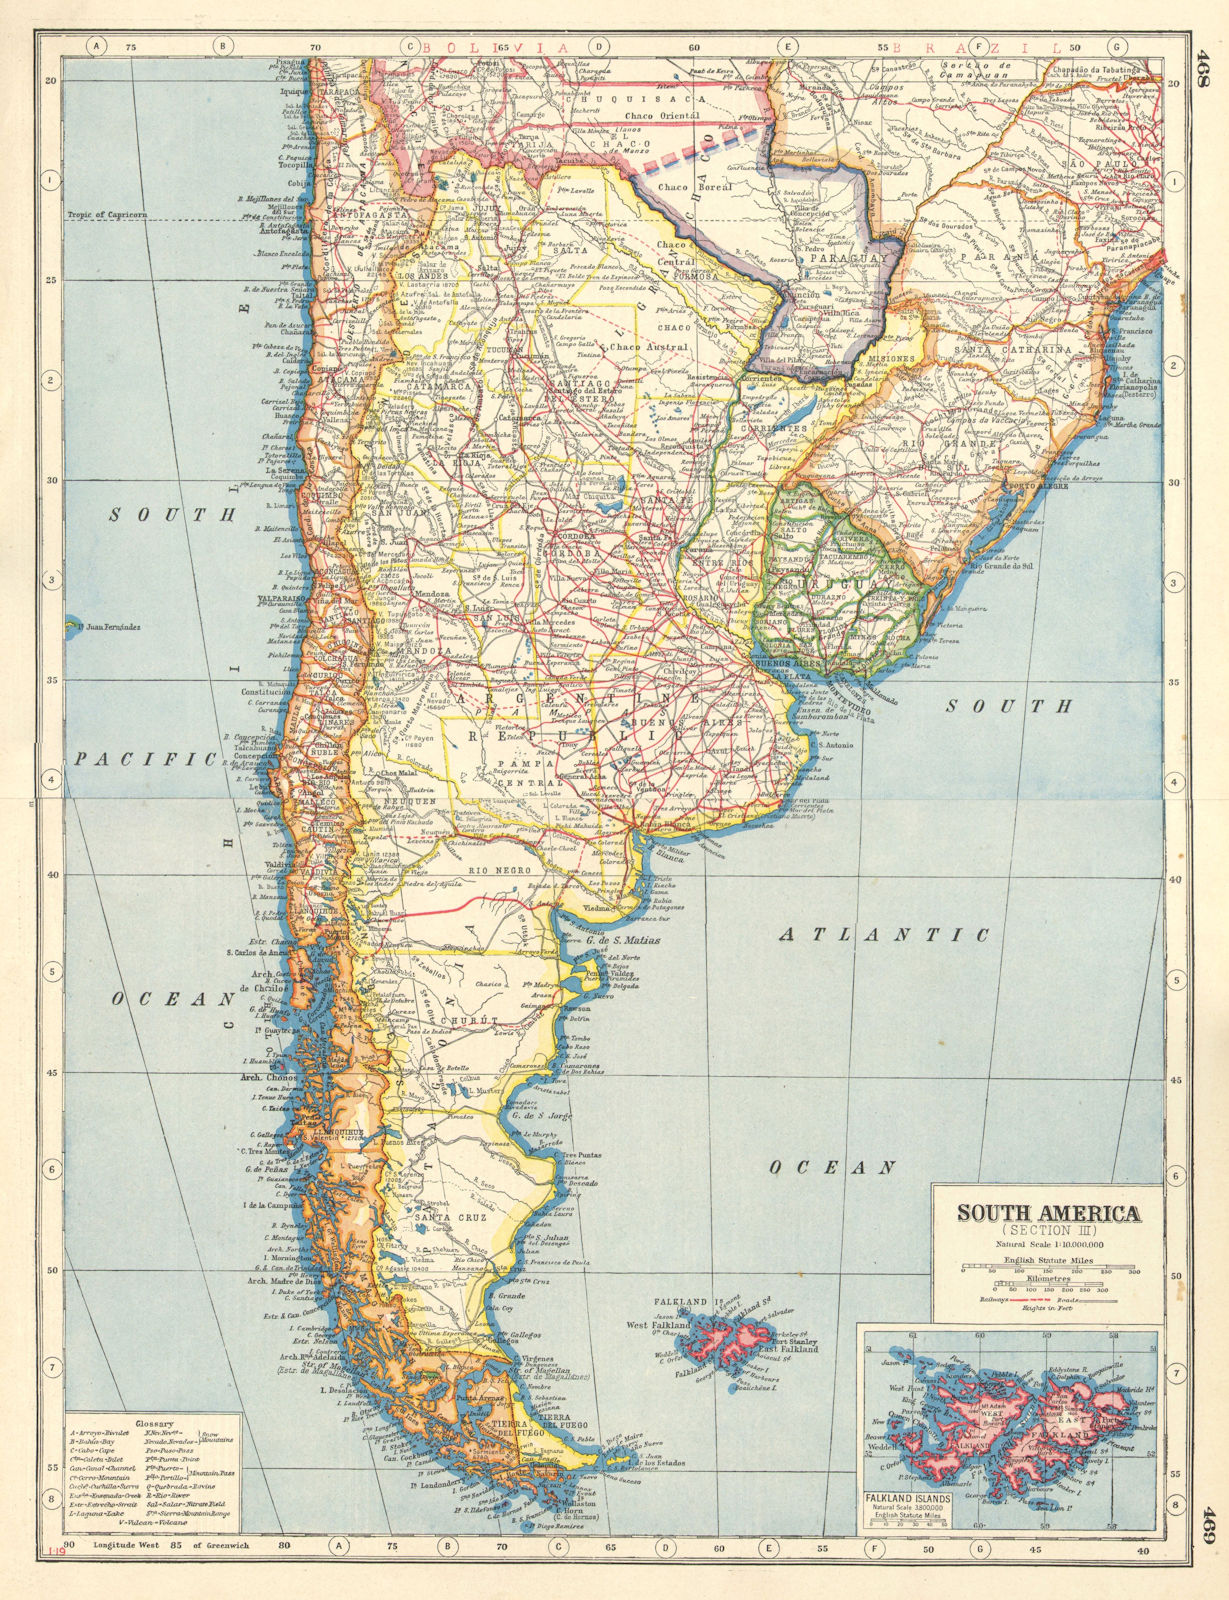 S AMERICA. Bolivia-Paraguay Gran Chaco border dispute. Chile Argentina 1920 map